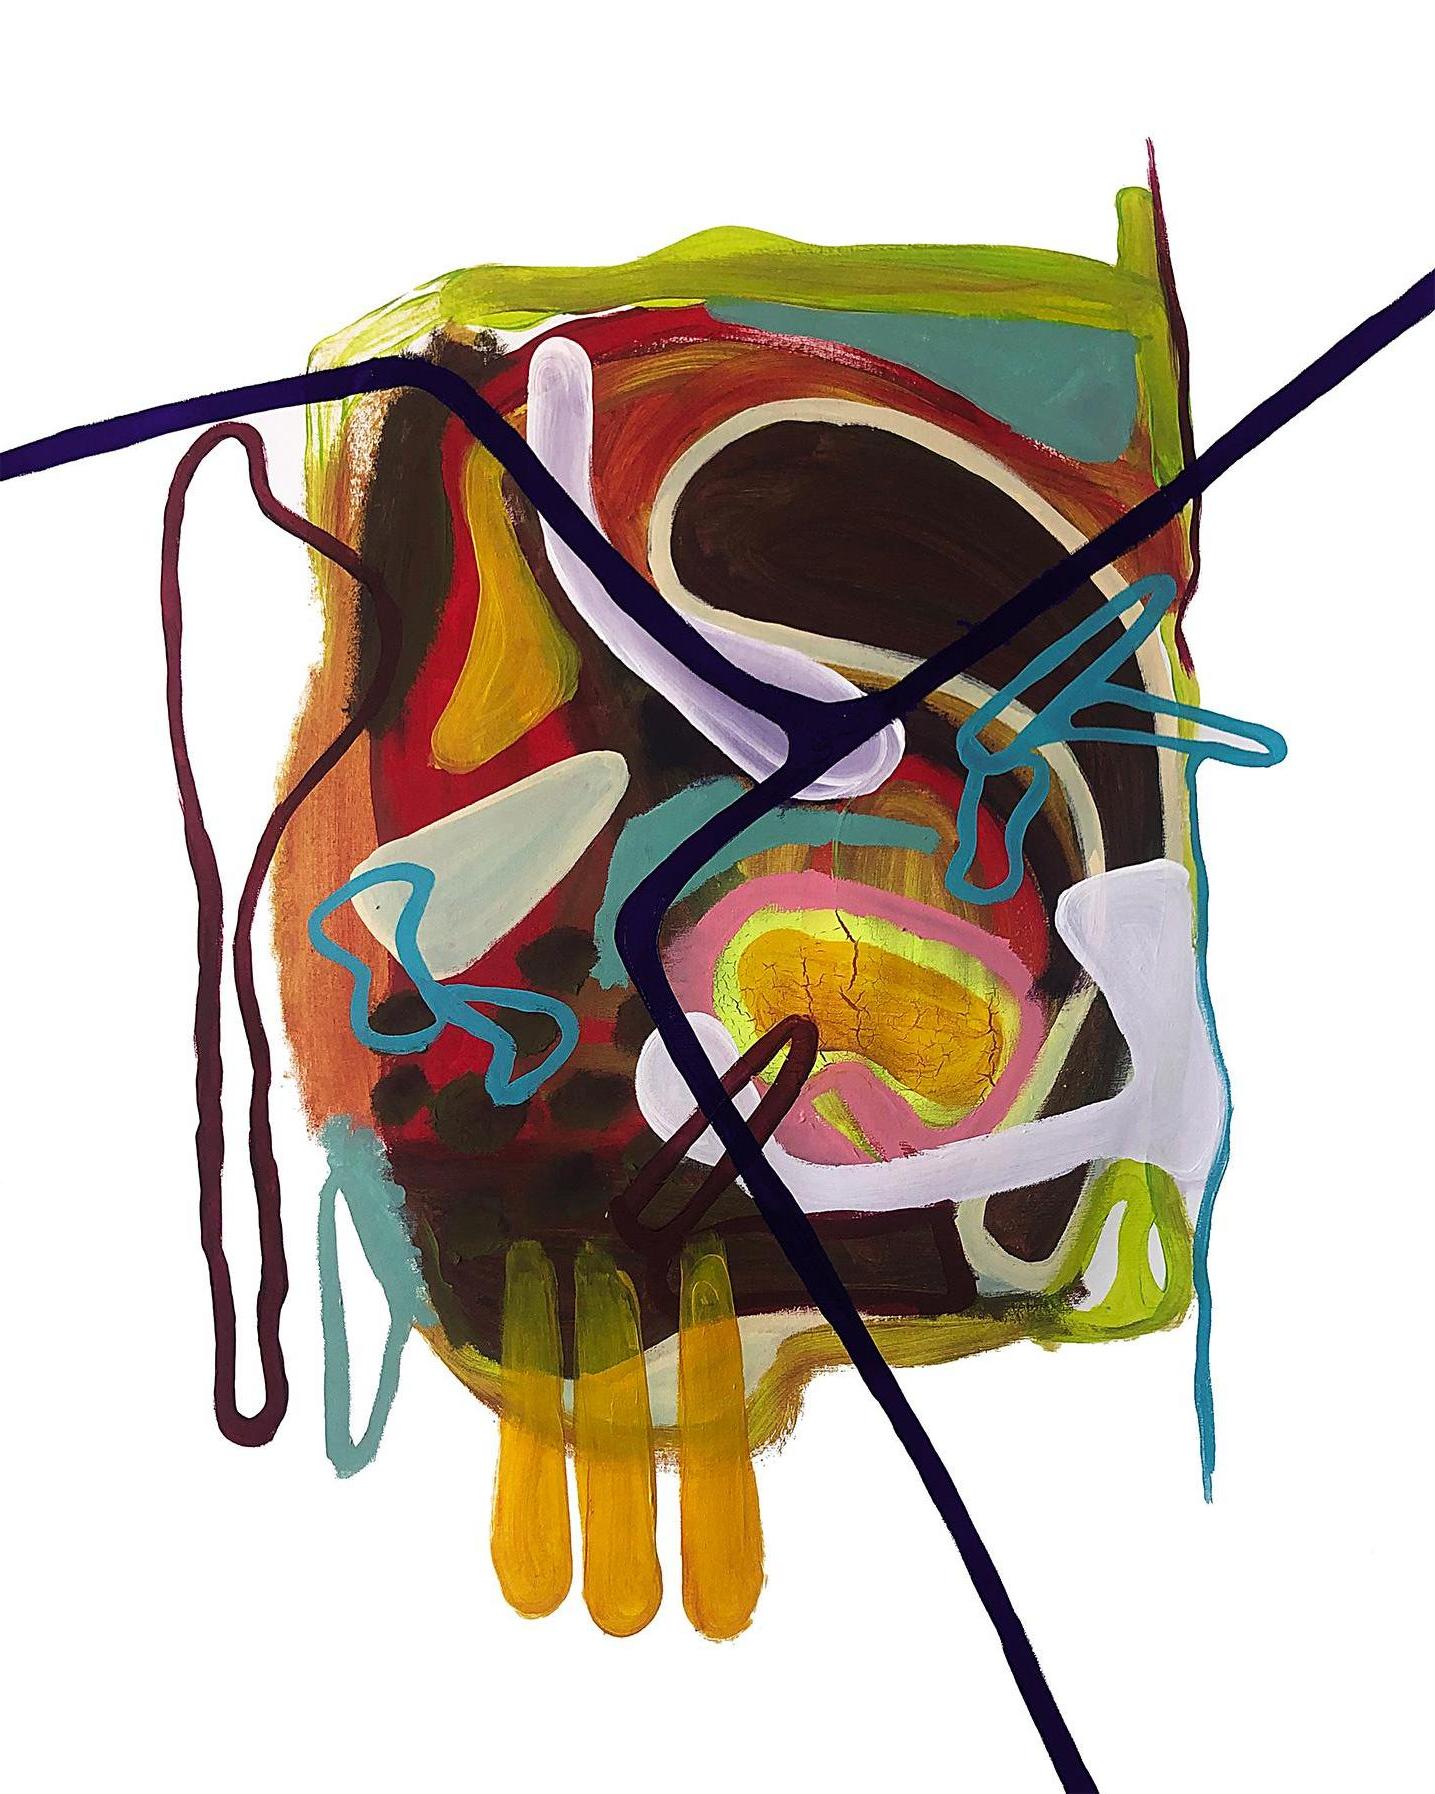 Alec Franco  Still-Life Painting - Plastic ADN V, Mixed media Abstract painting on Canvas